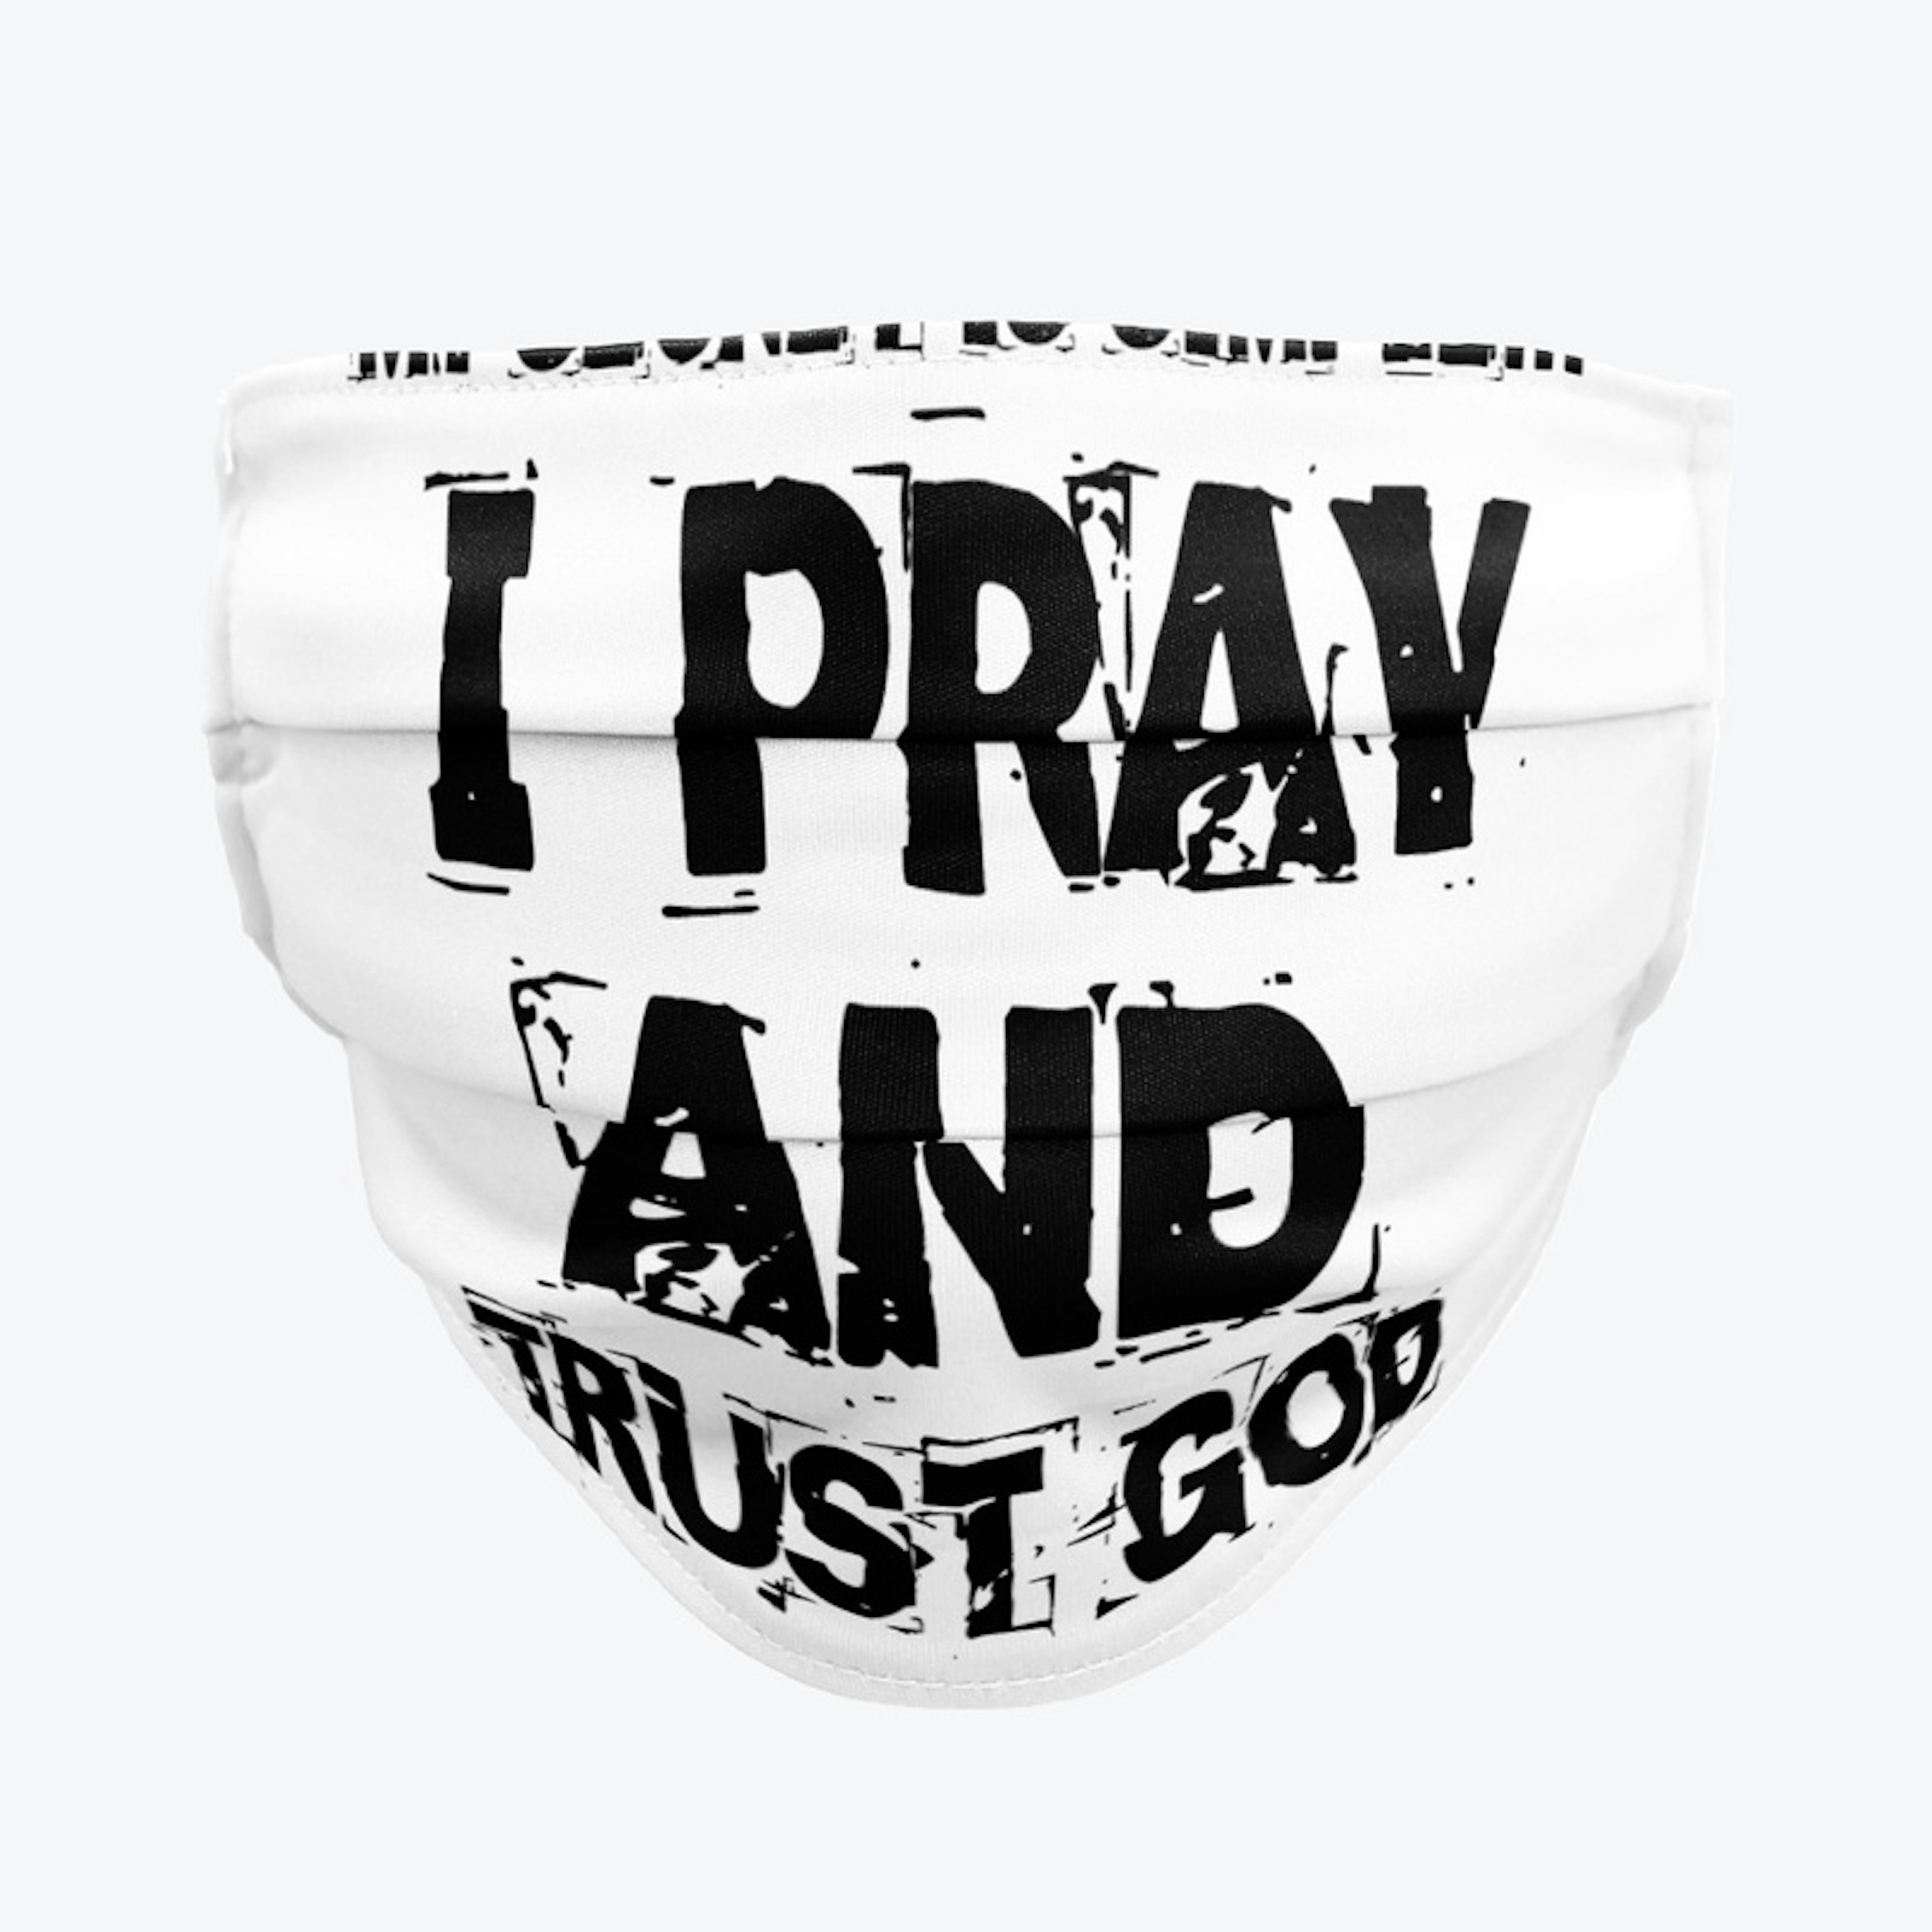 PRAY AND TRUST GOD